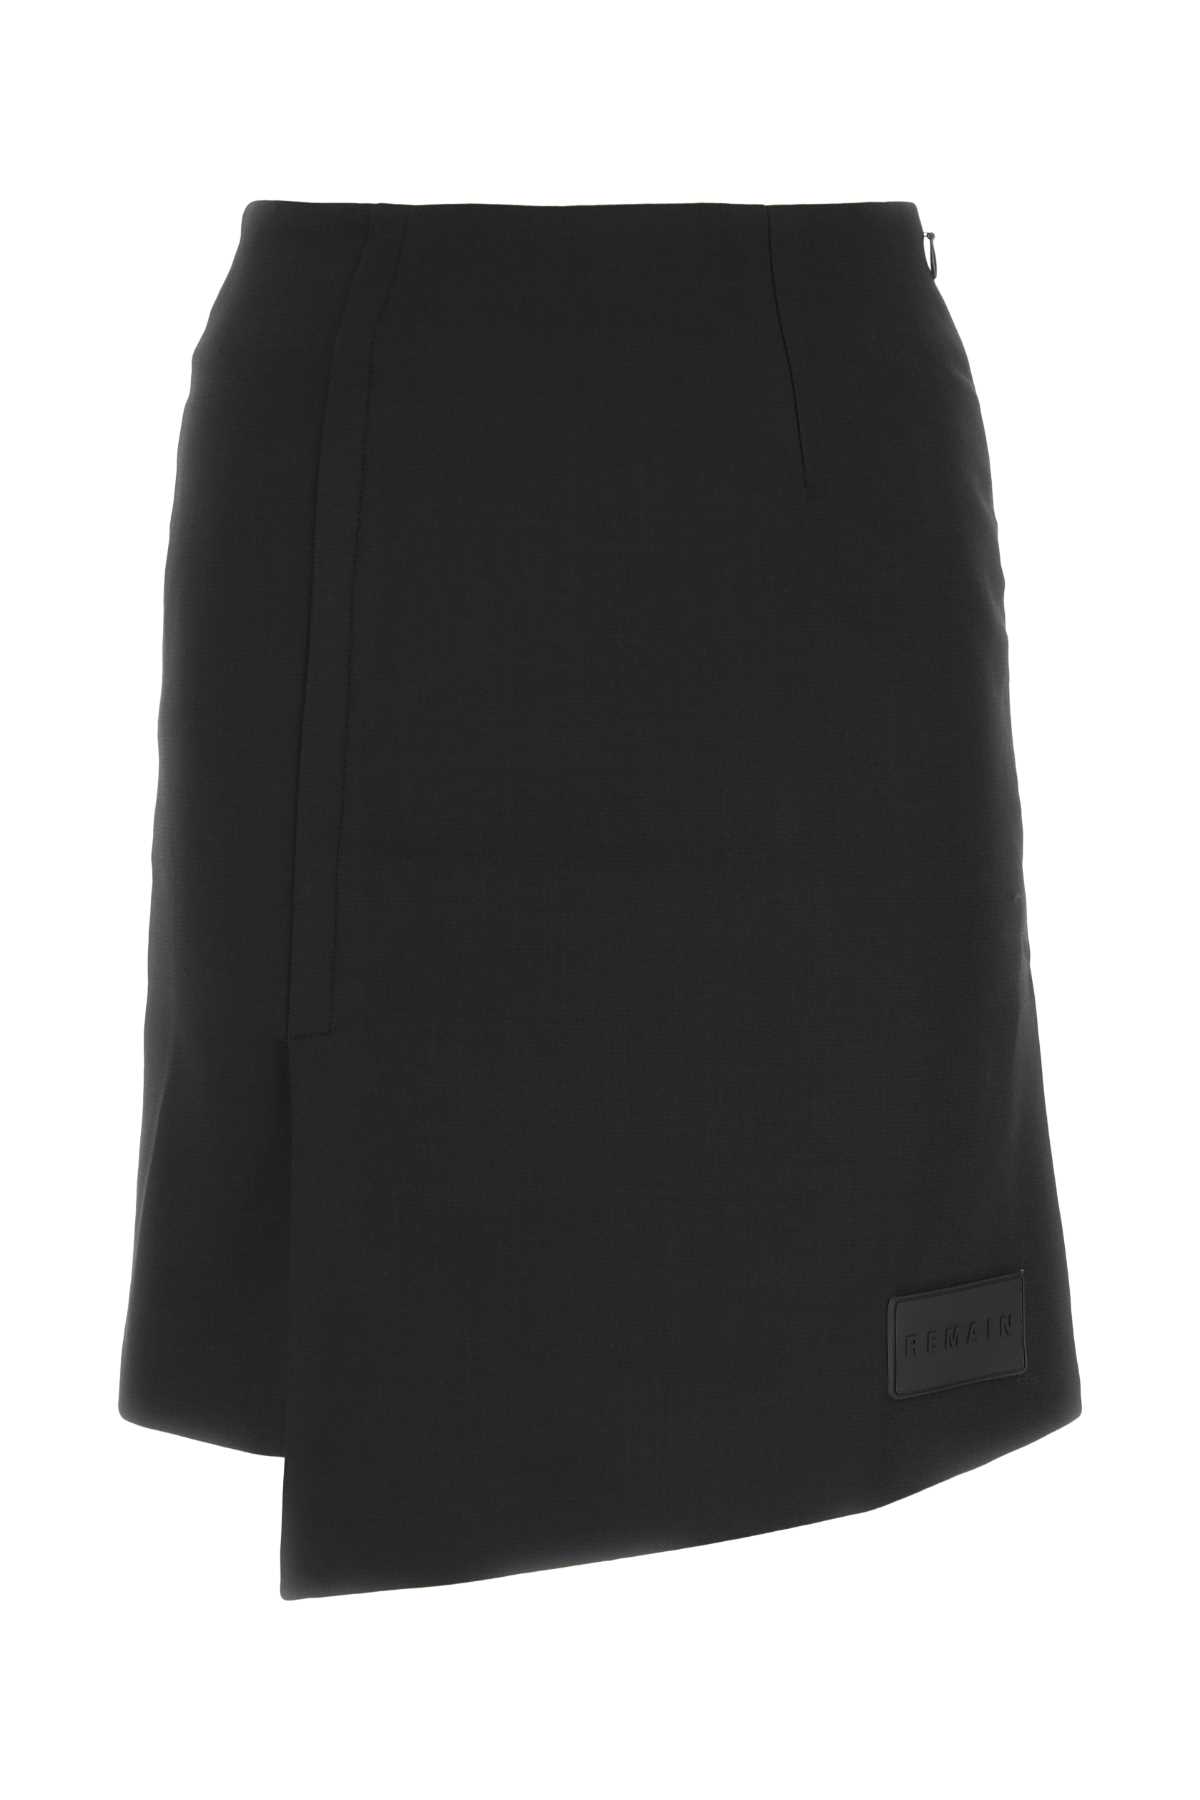 Shop Remain Birger Christensen Black Stretch Polyester Blend Skirt